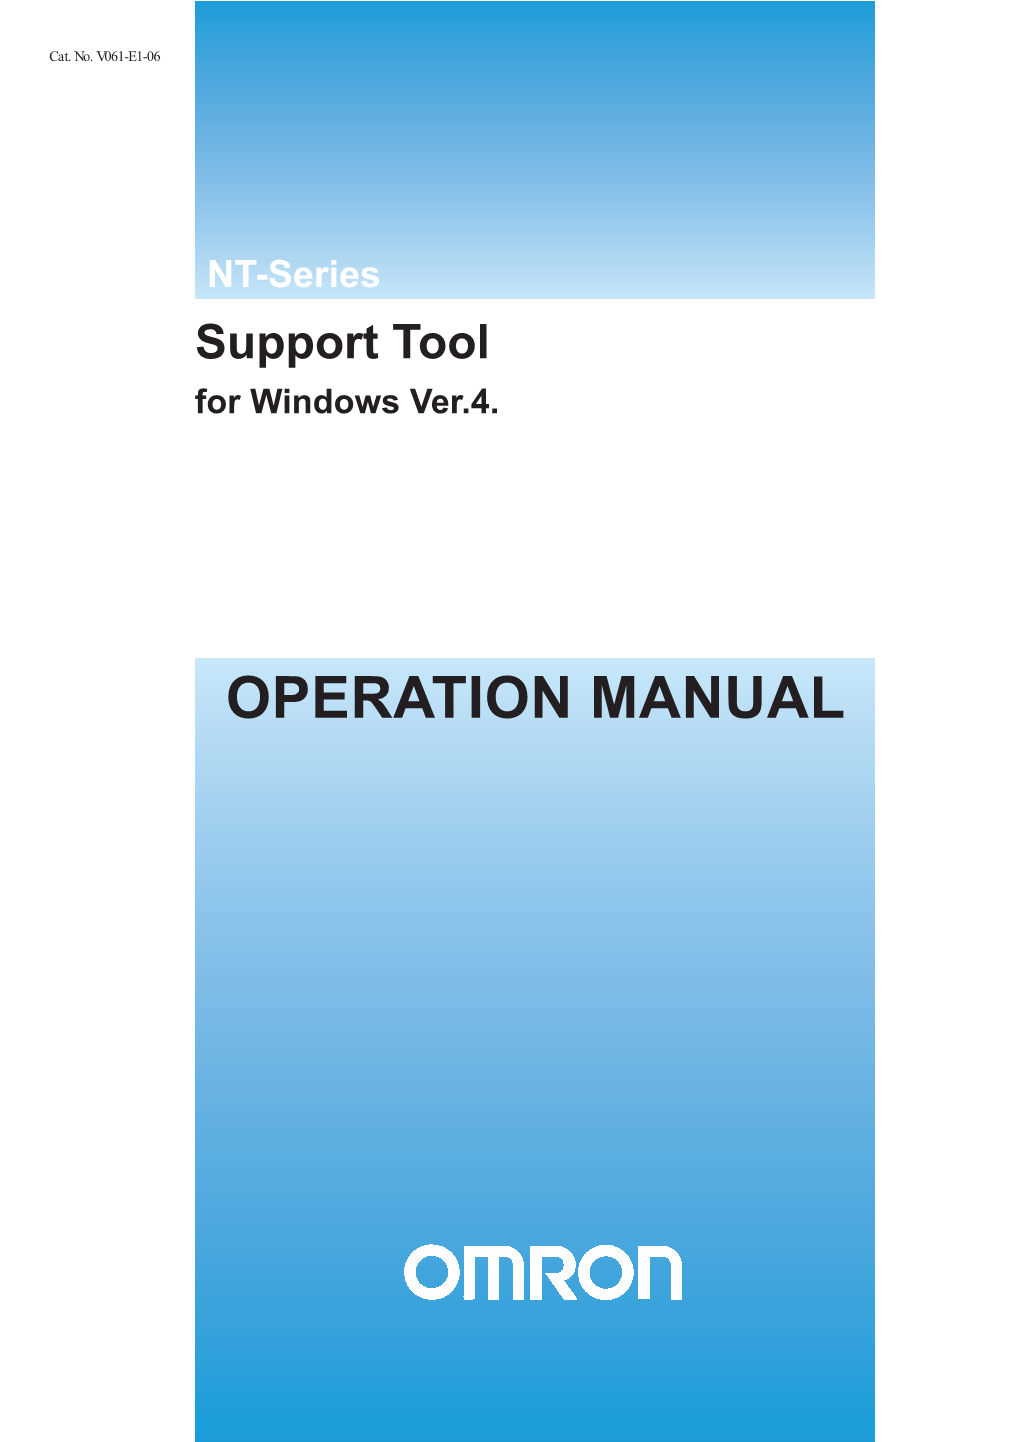 NT-Series Operation Manual